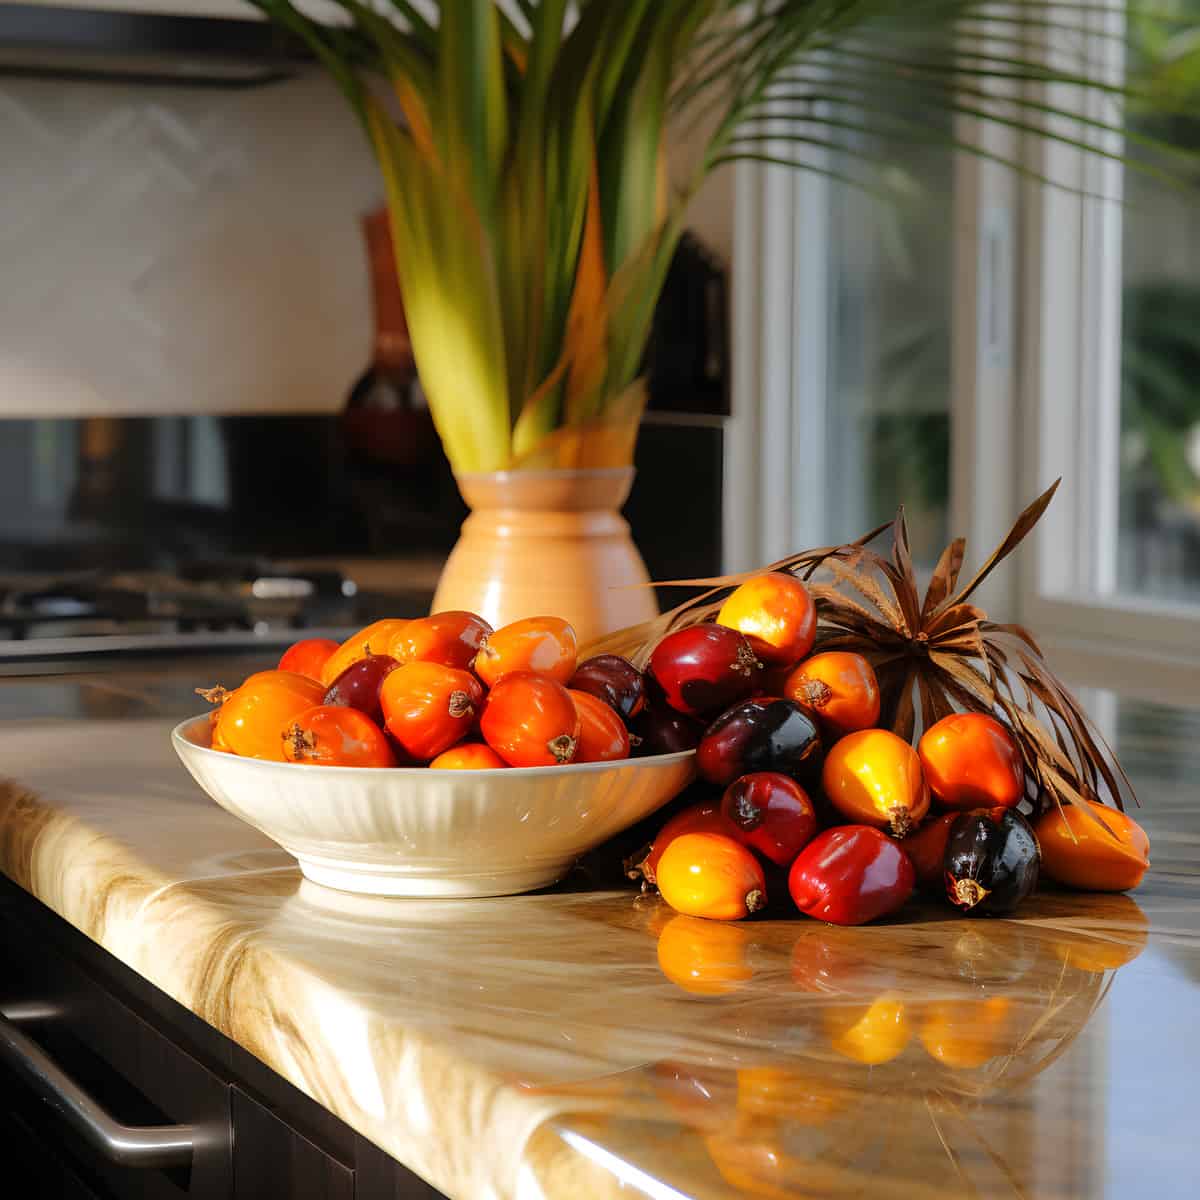 Corozo Palm Fruit on a kitchen counter